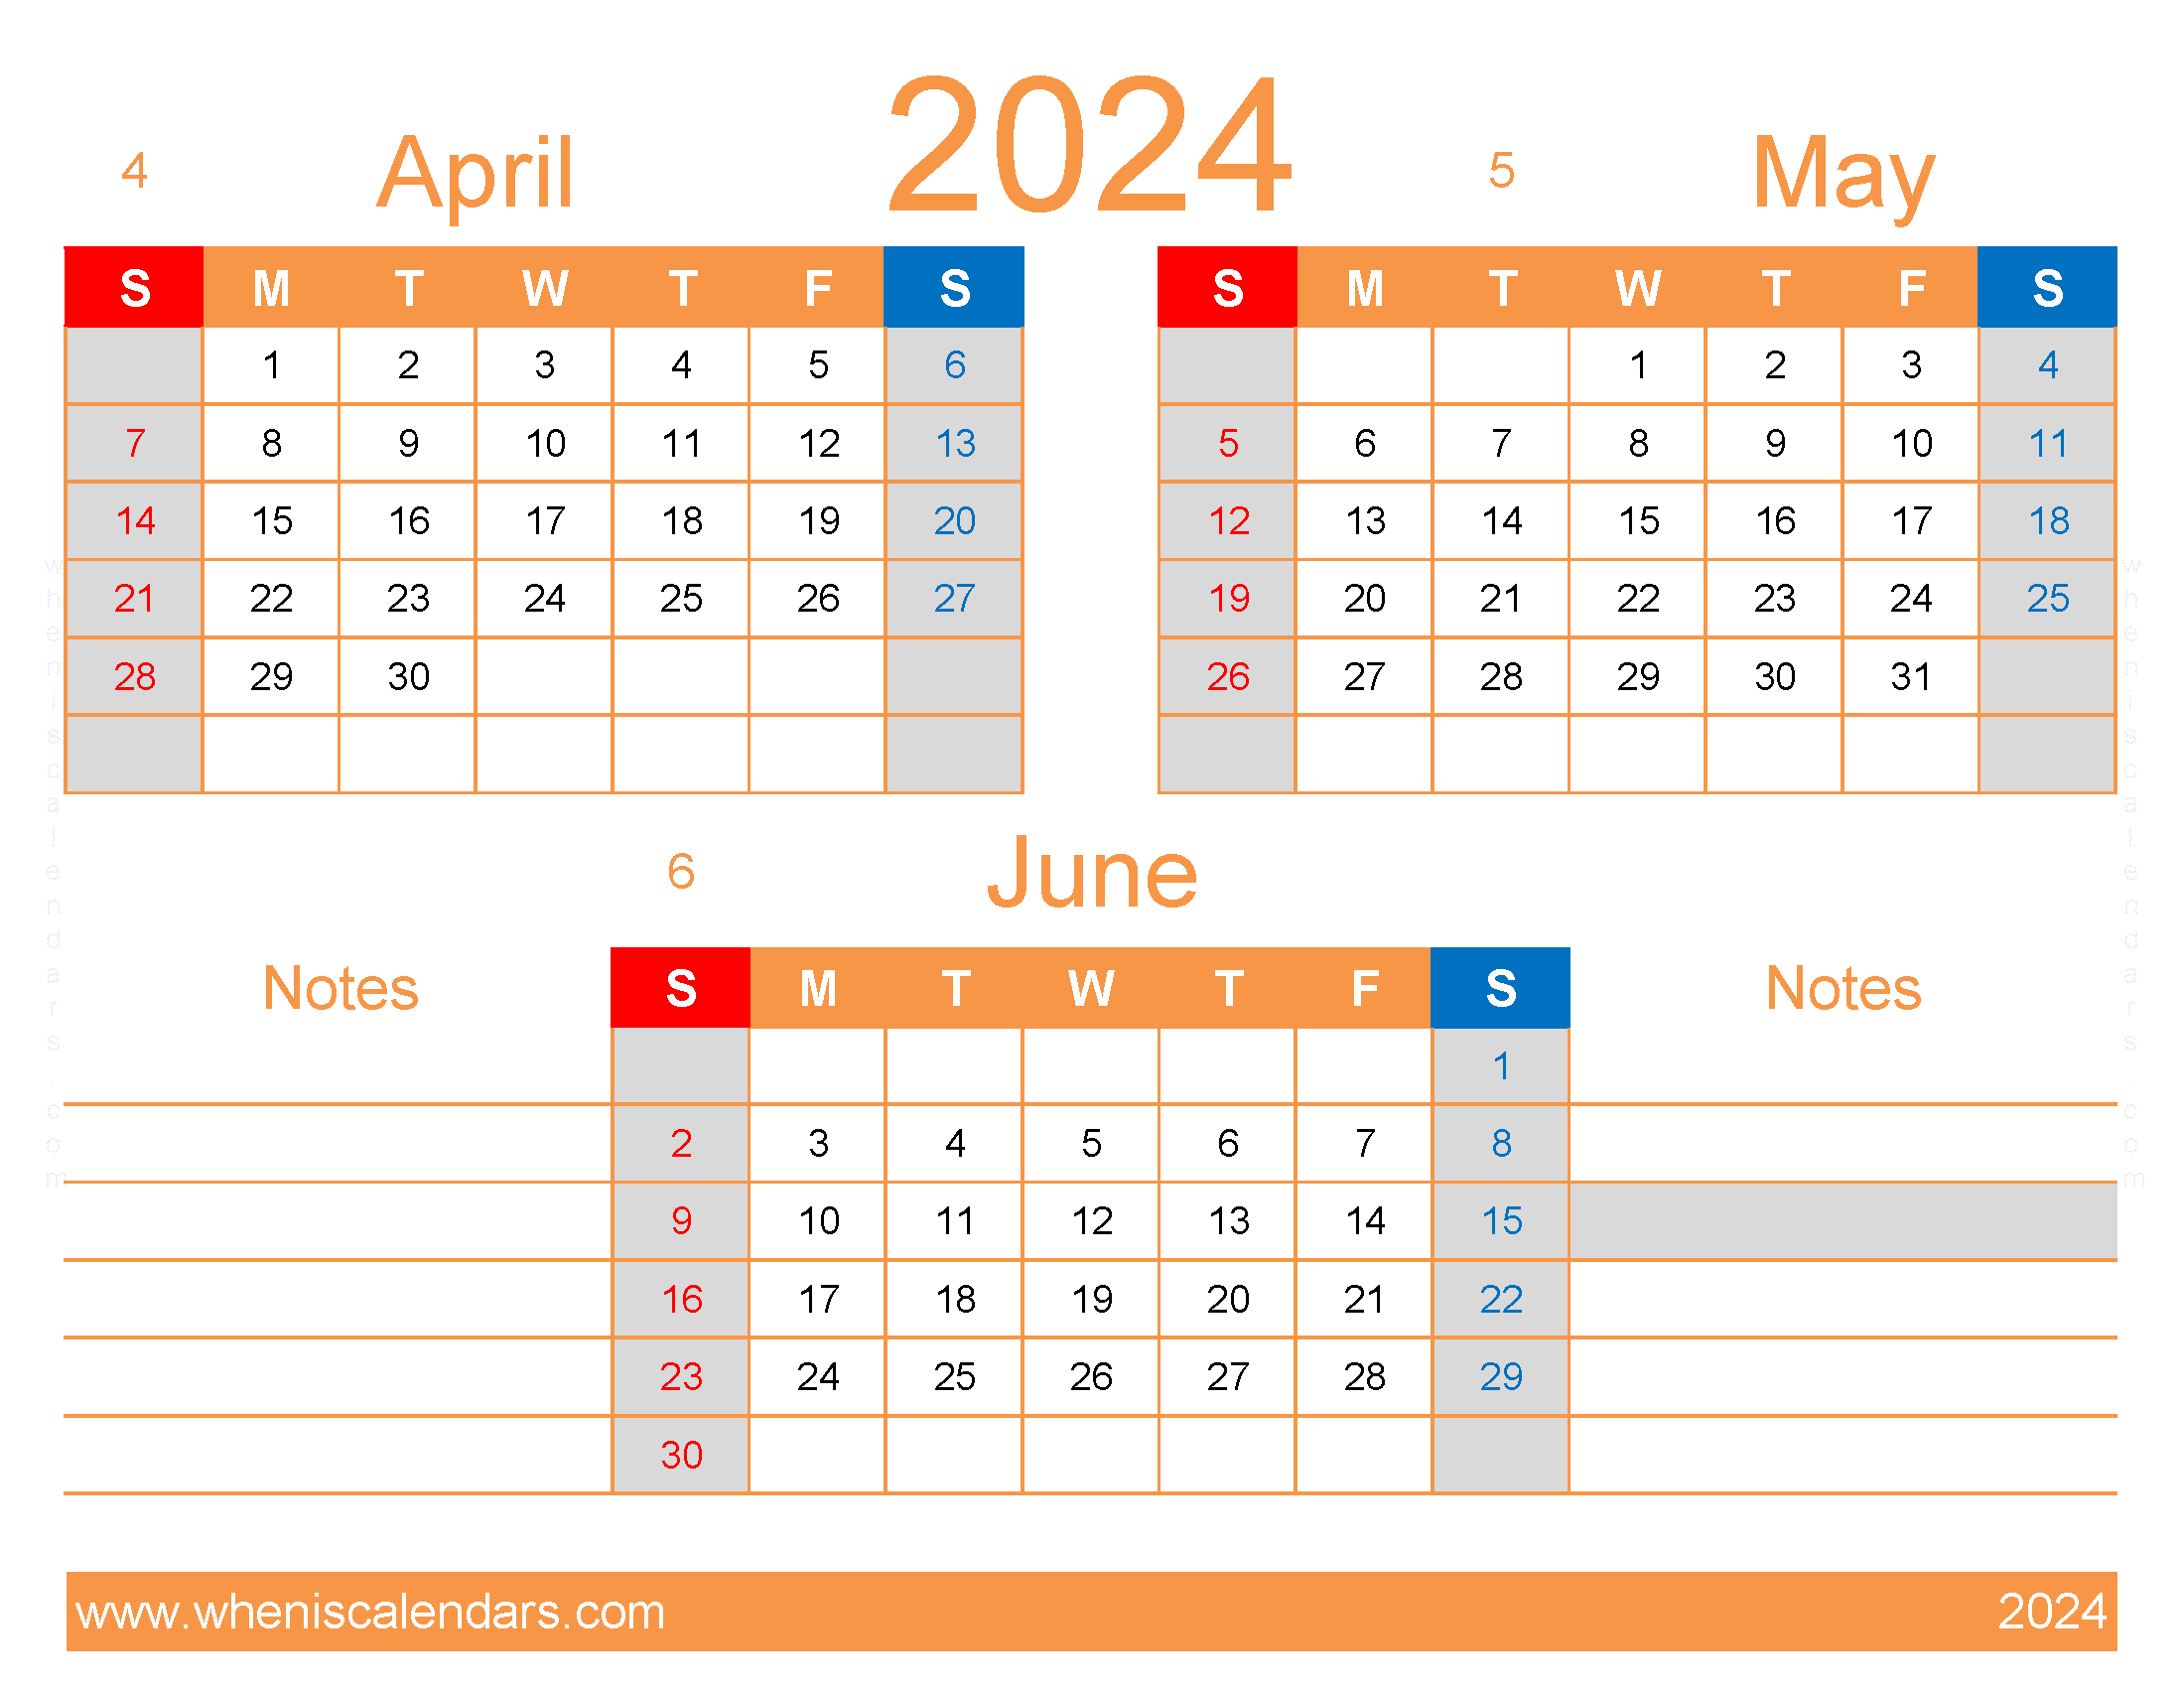 Download Calendar Apr May Jun 2024 AMJ426